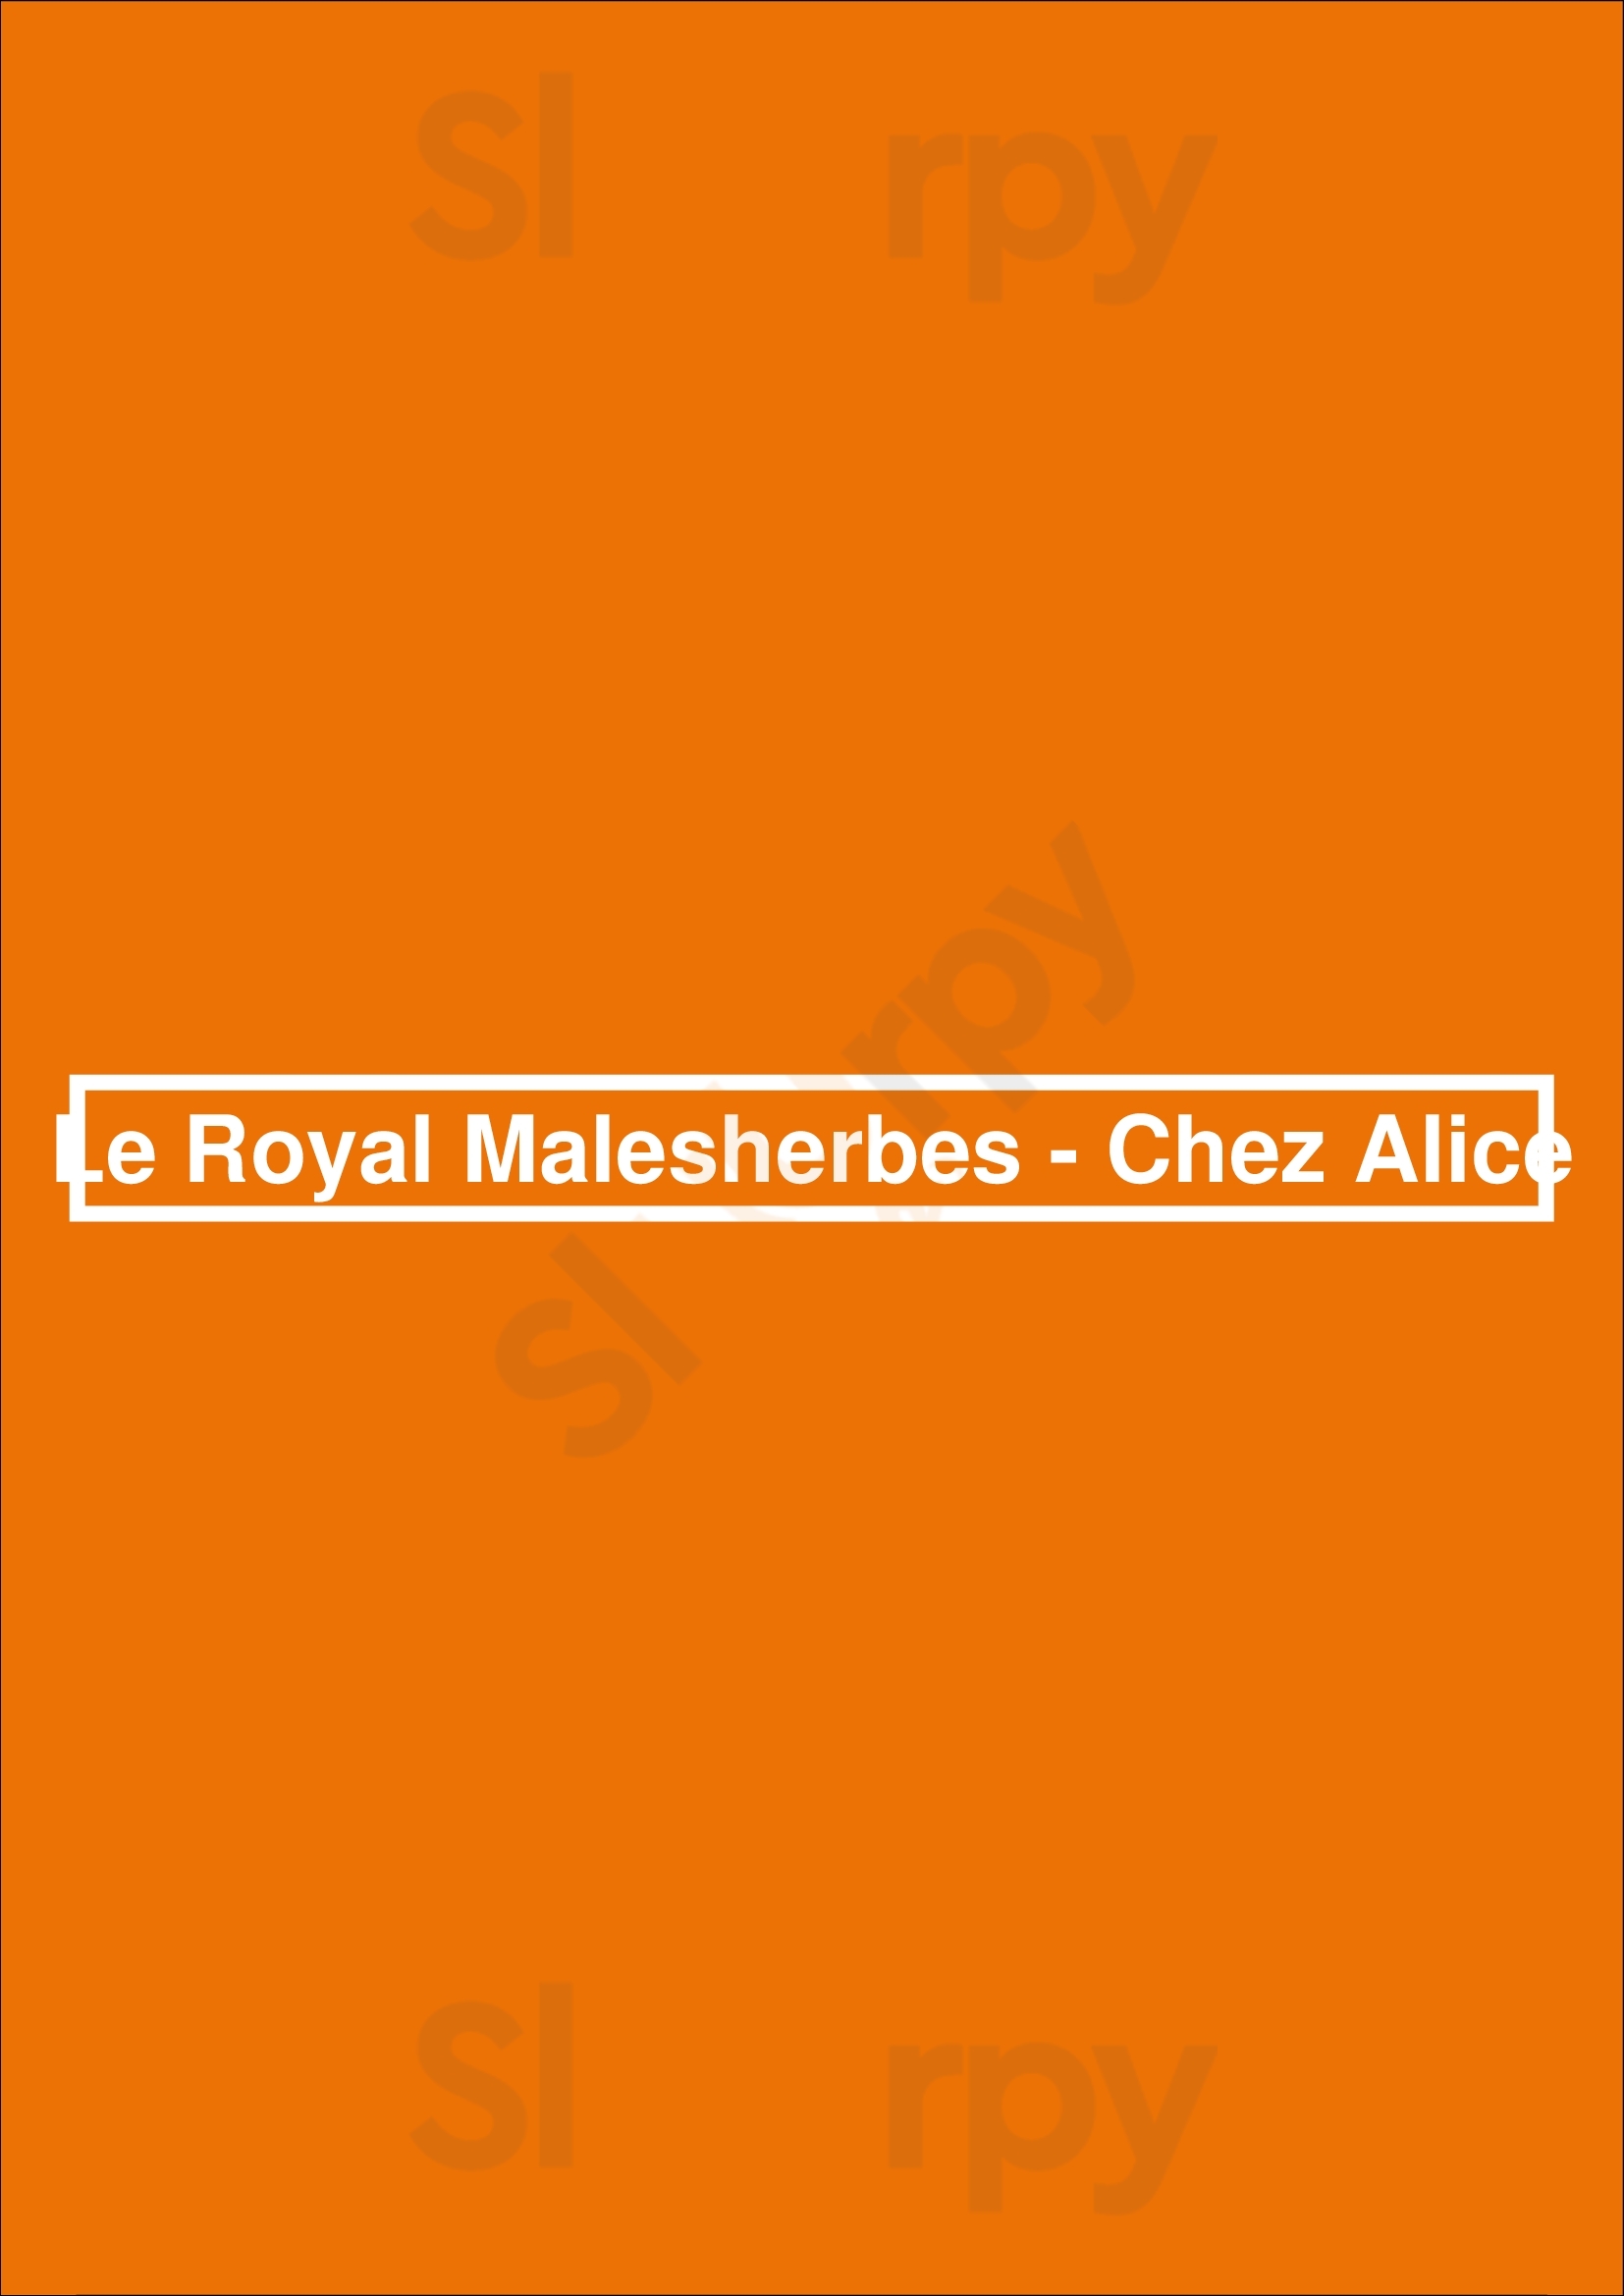 Le Royal Malesherbes - Chez Alice Paris Menu - 1